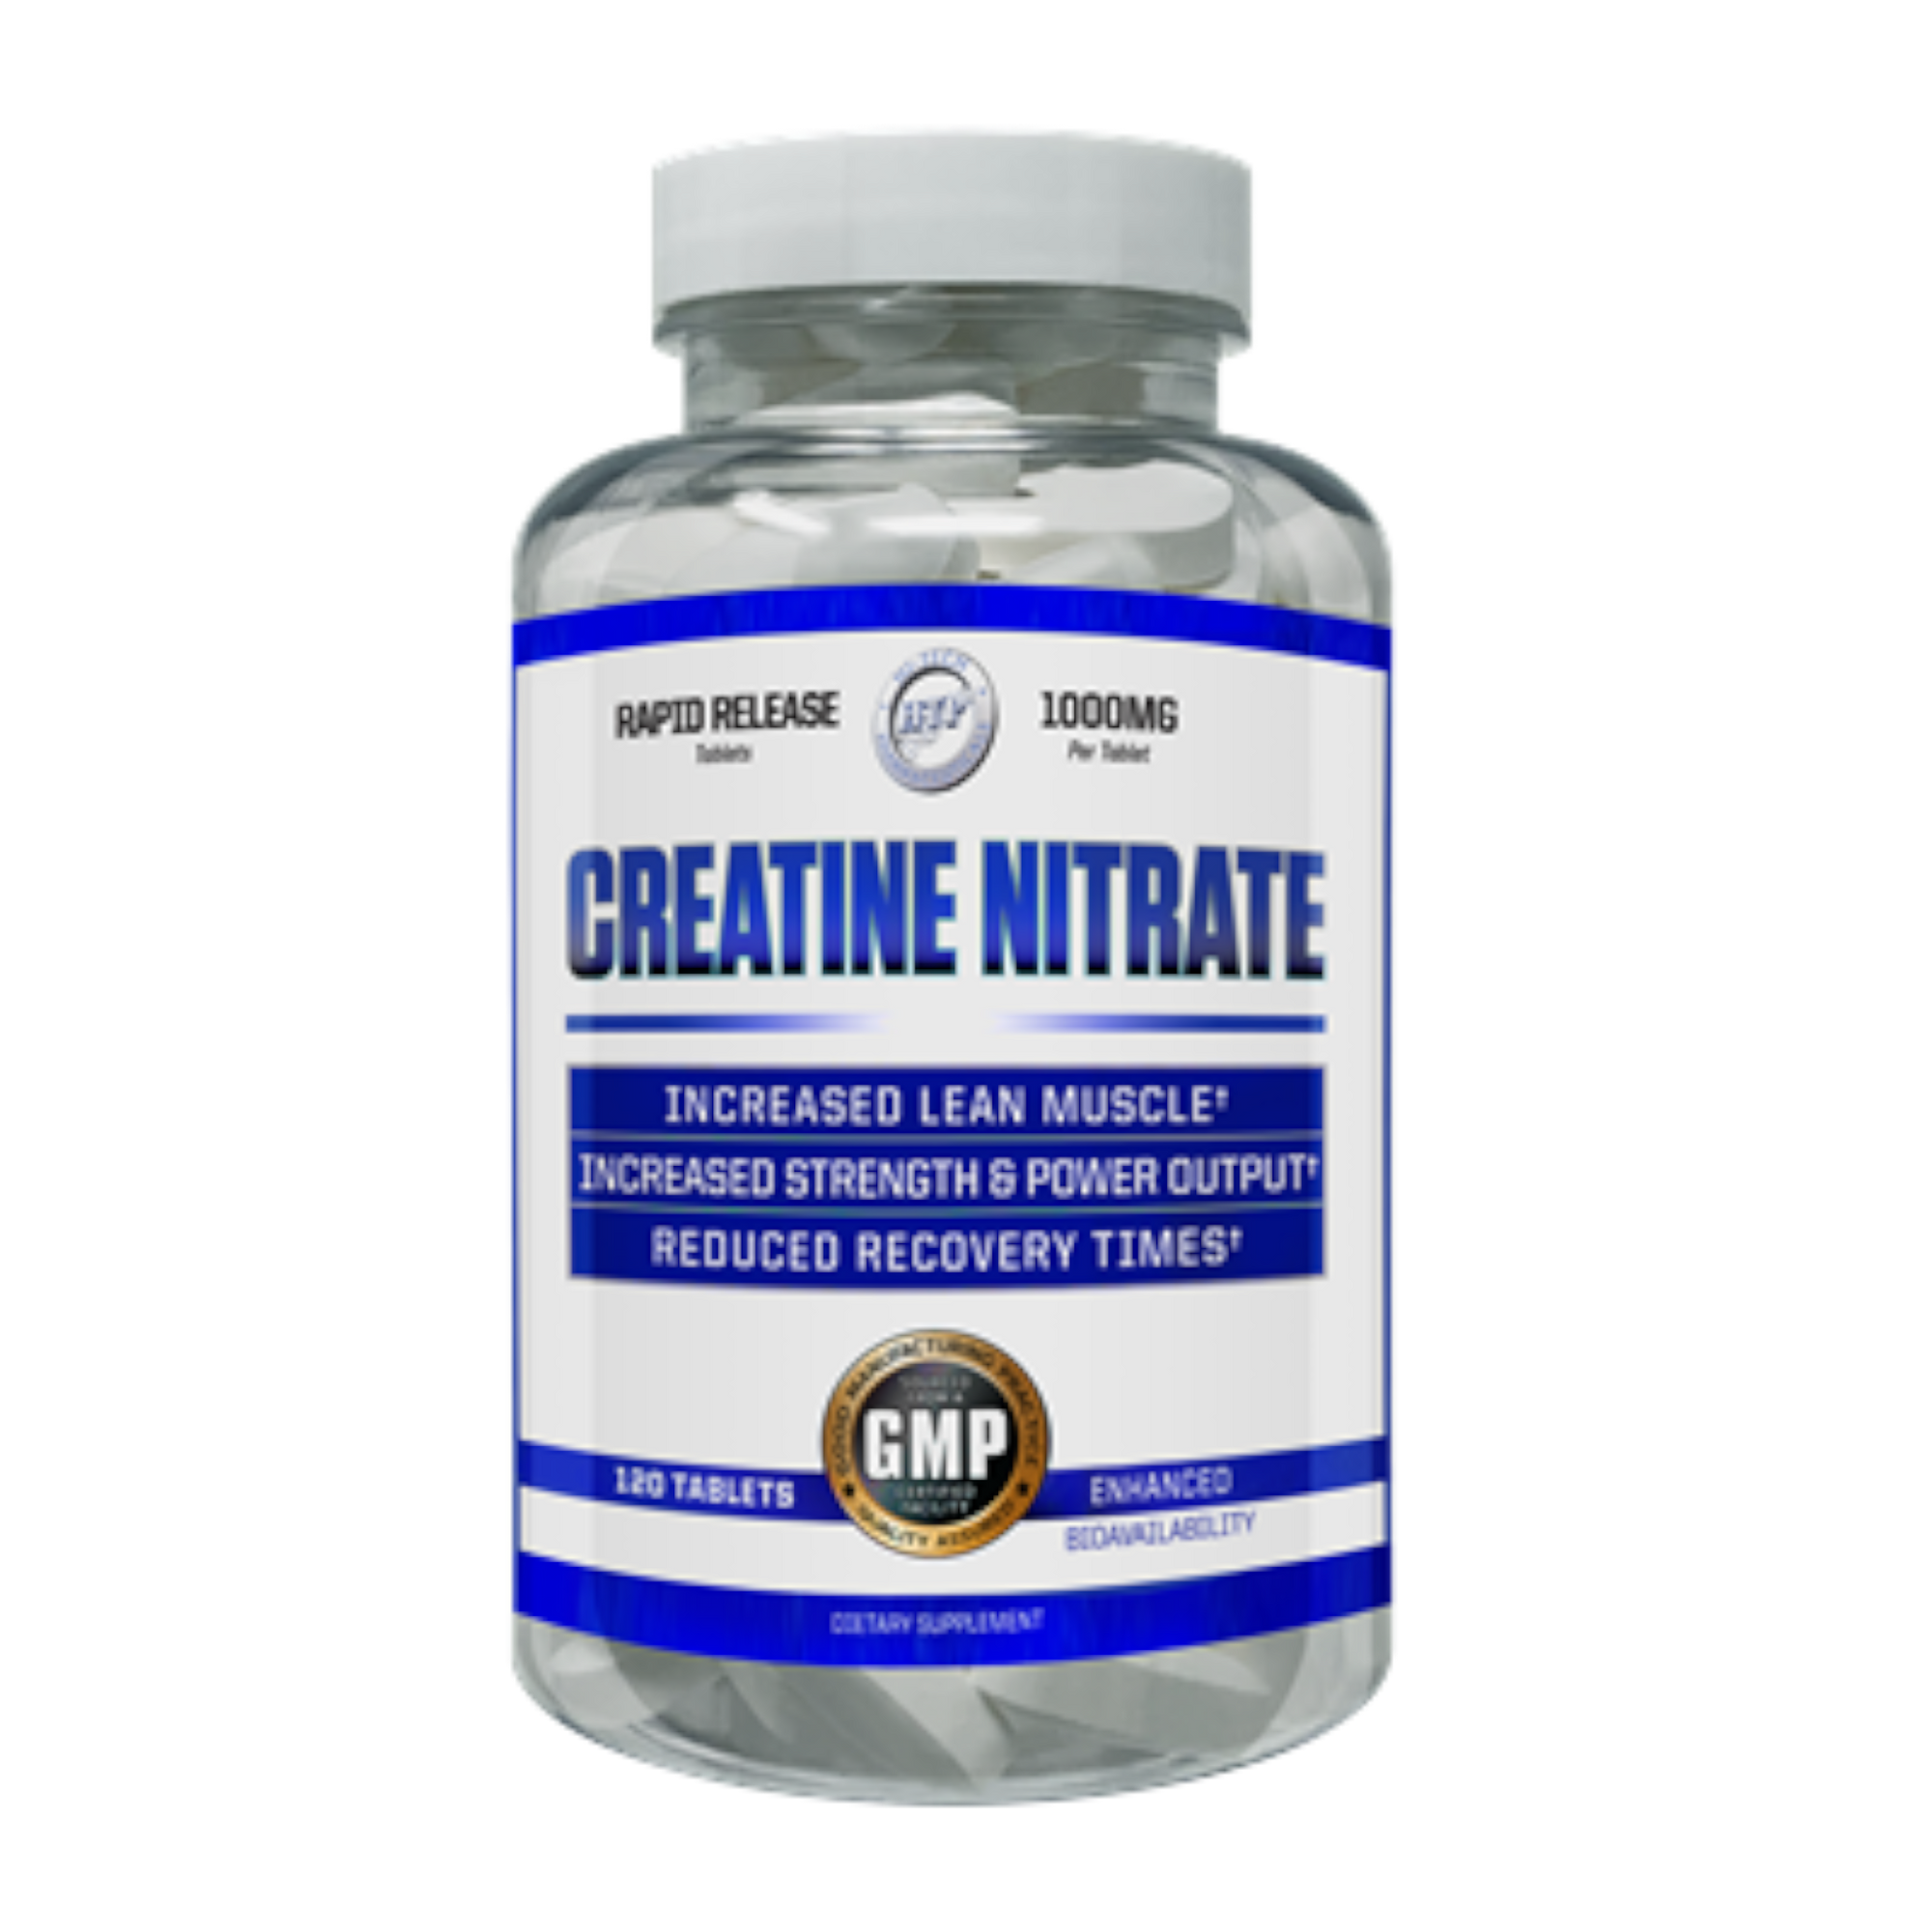 Hi-tech Creatine Nitrate